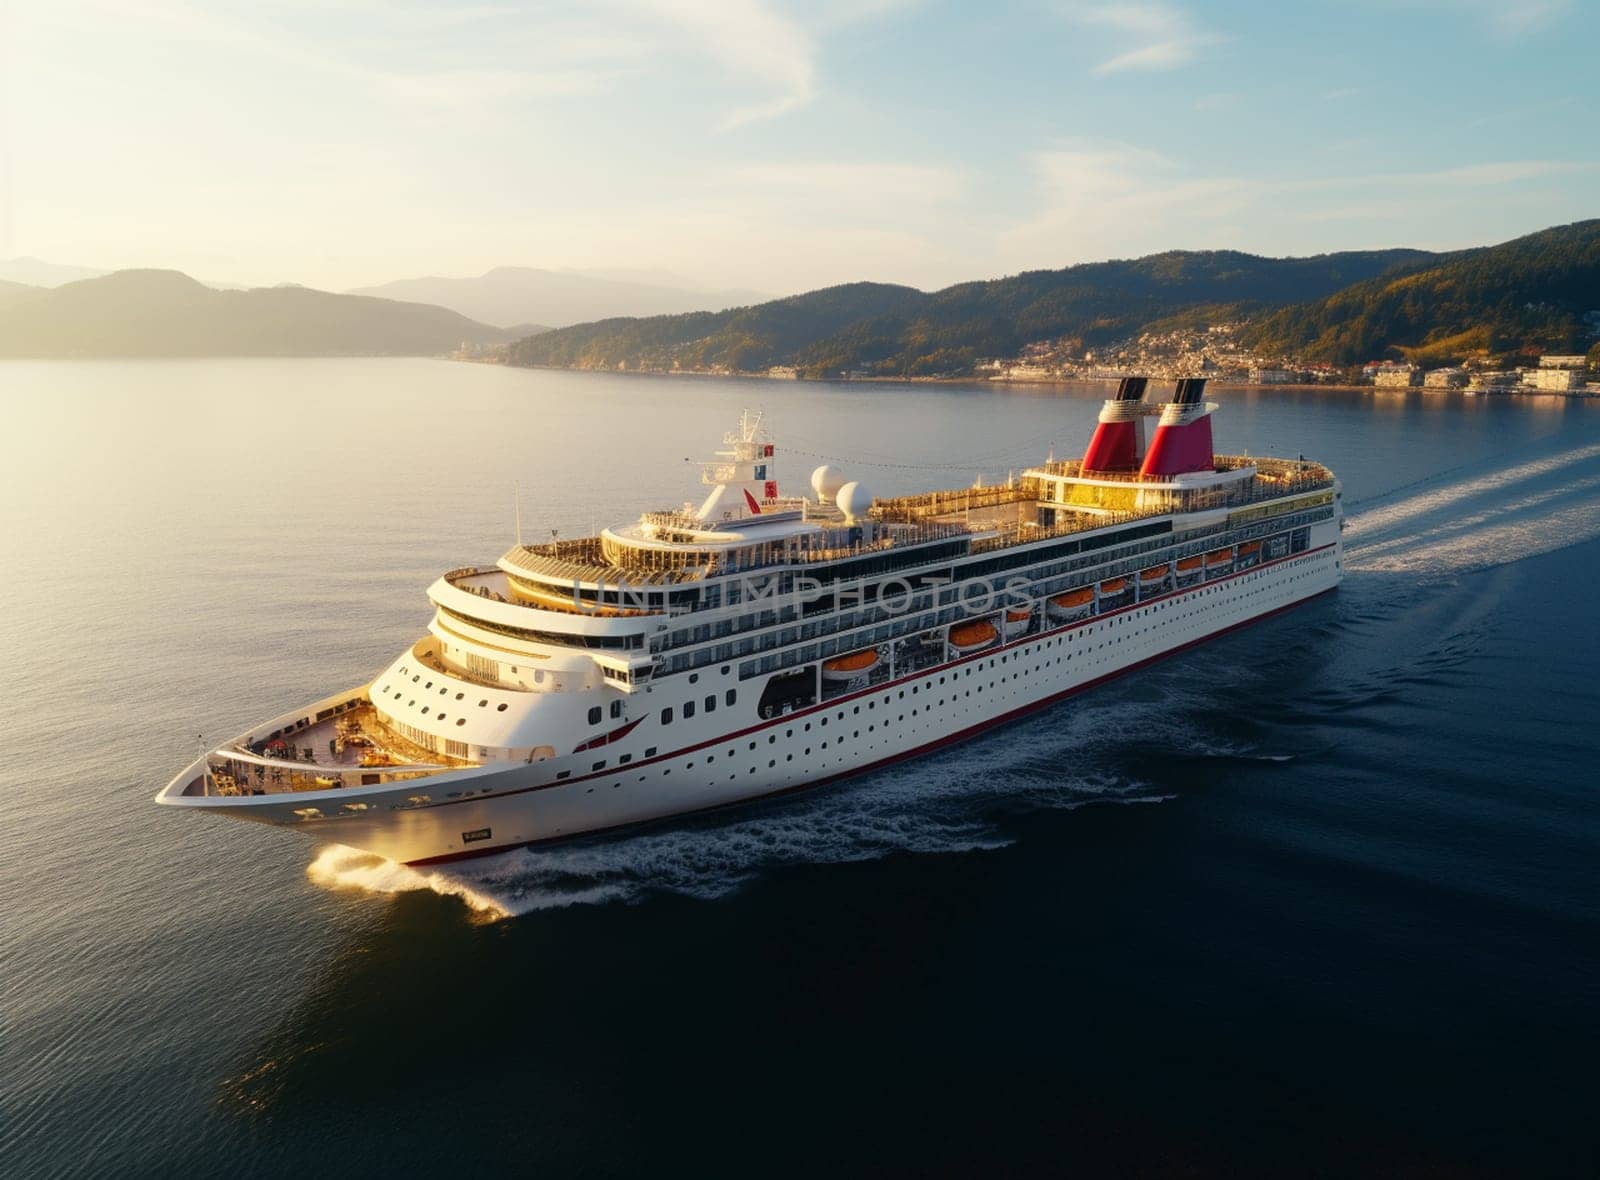 Luxury cruise ship sailing to port on sunrise by Andelov13